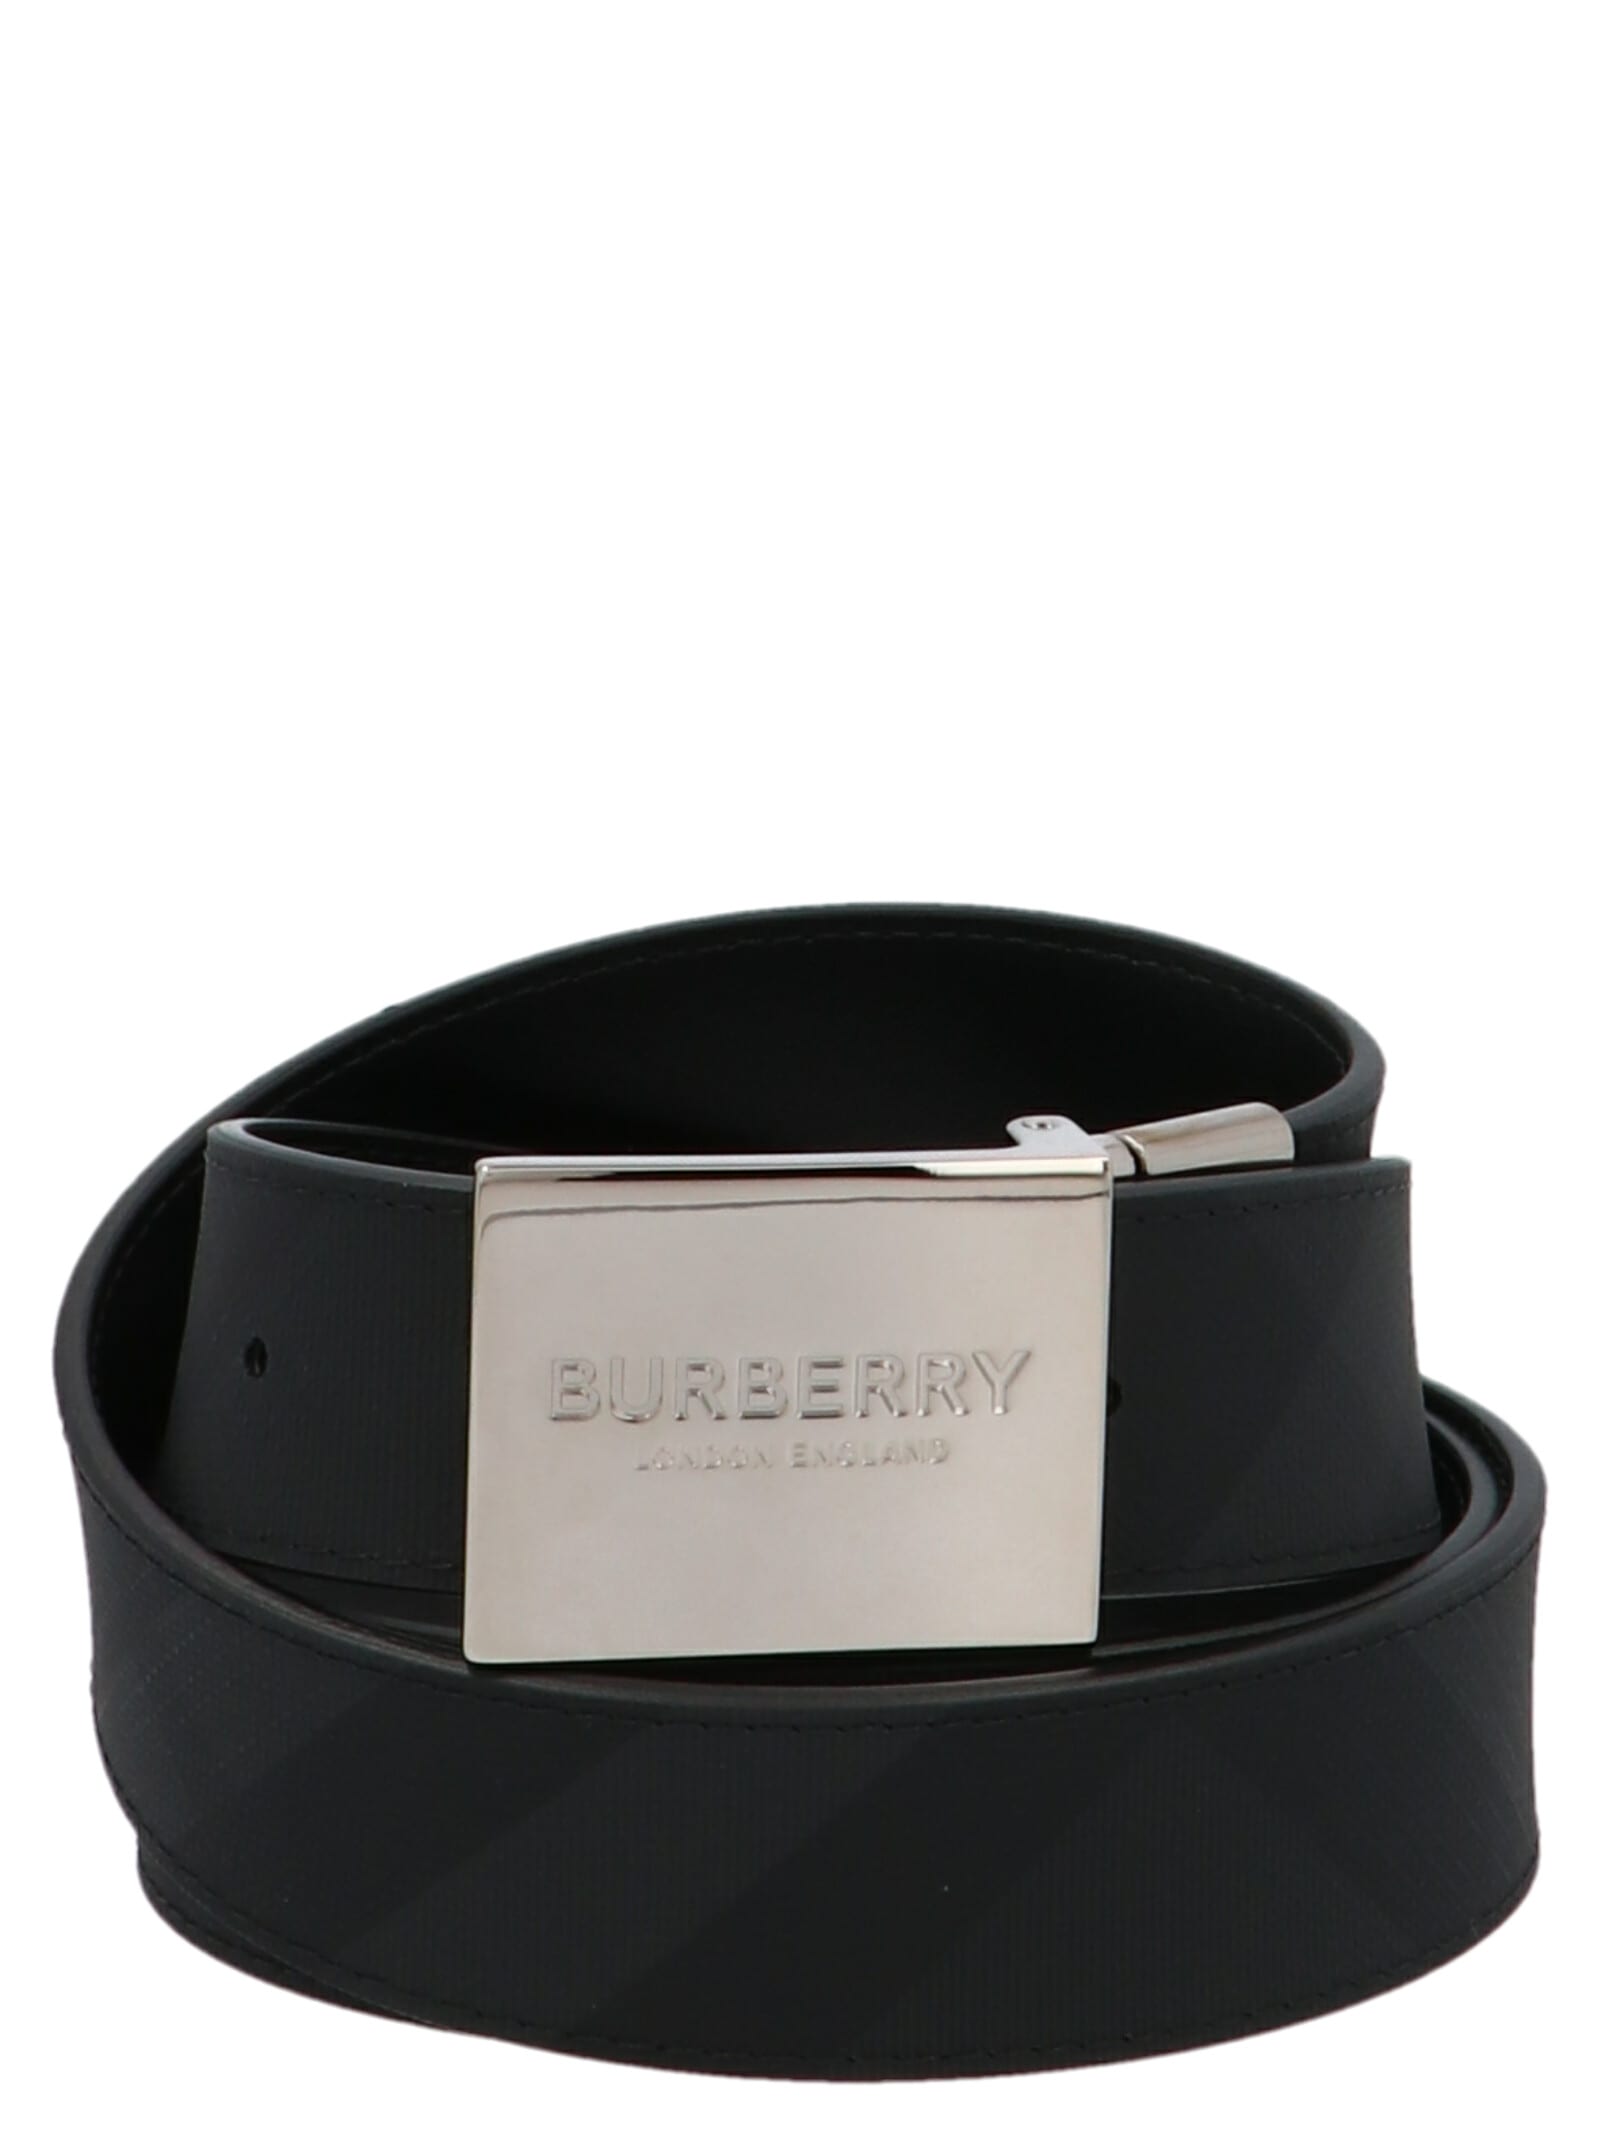 burberry belts on sale